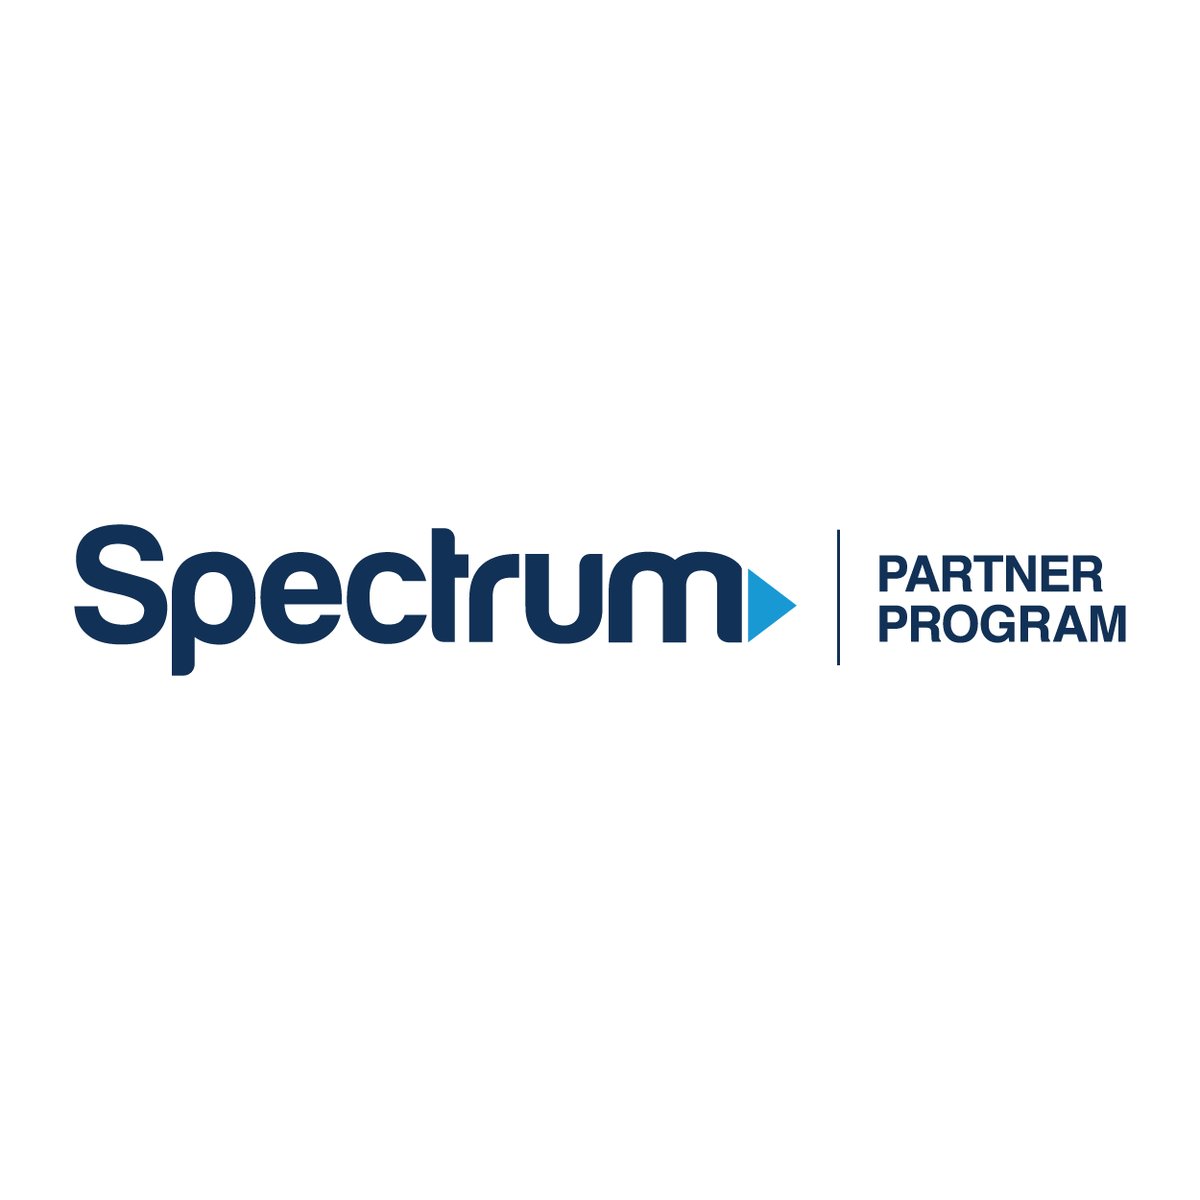 Spectrum Business-Supplier Program-01